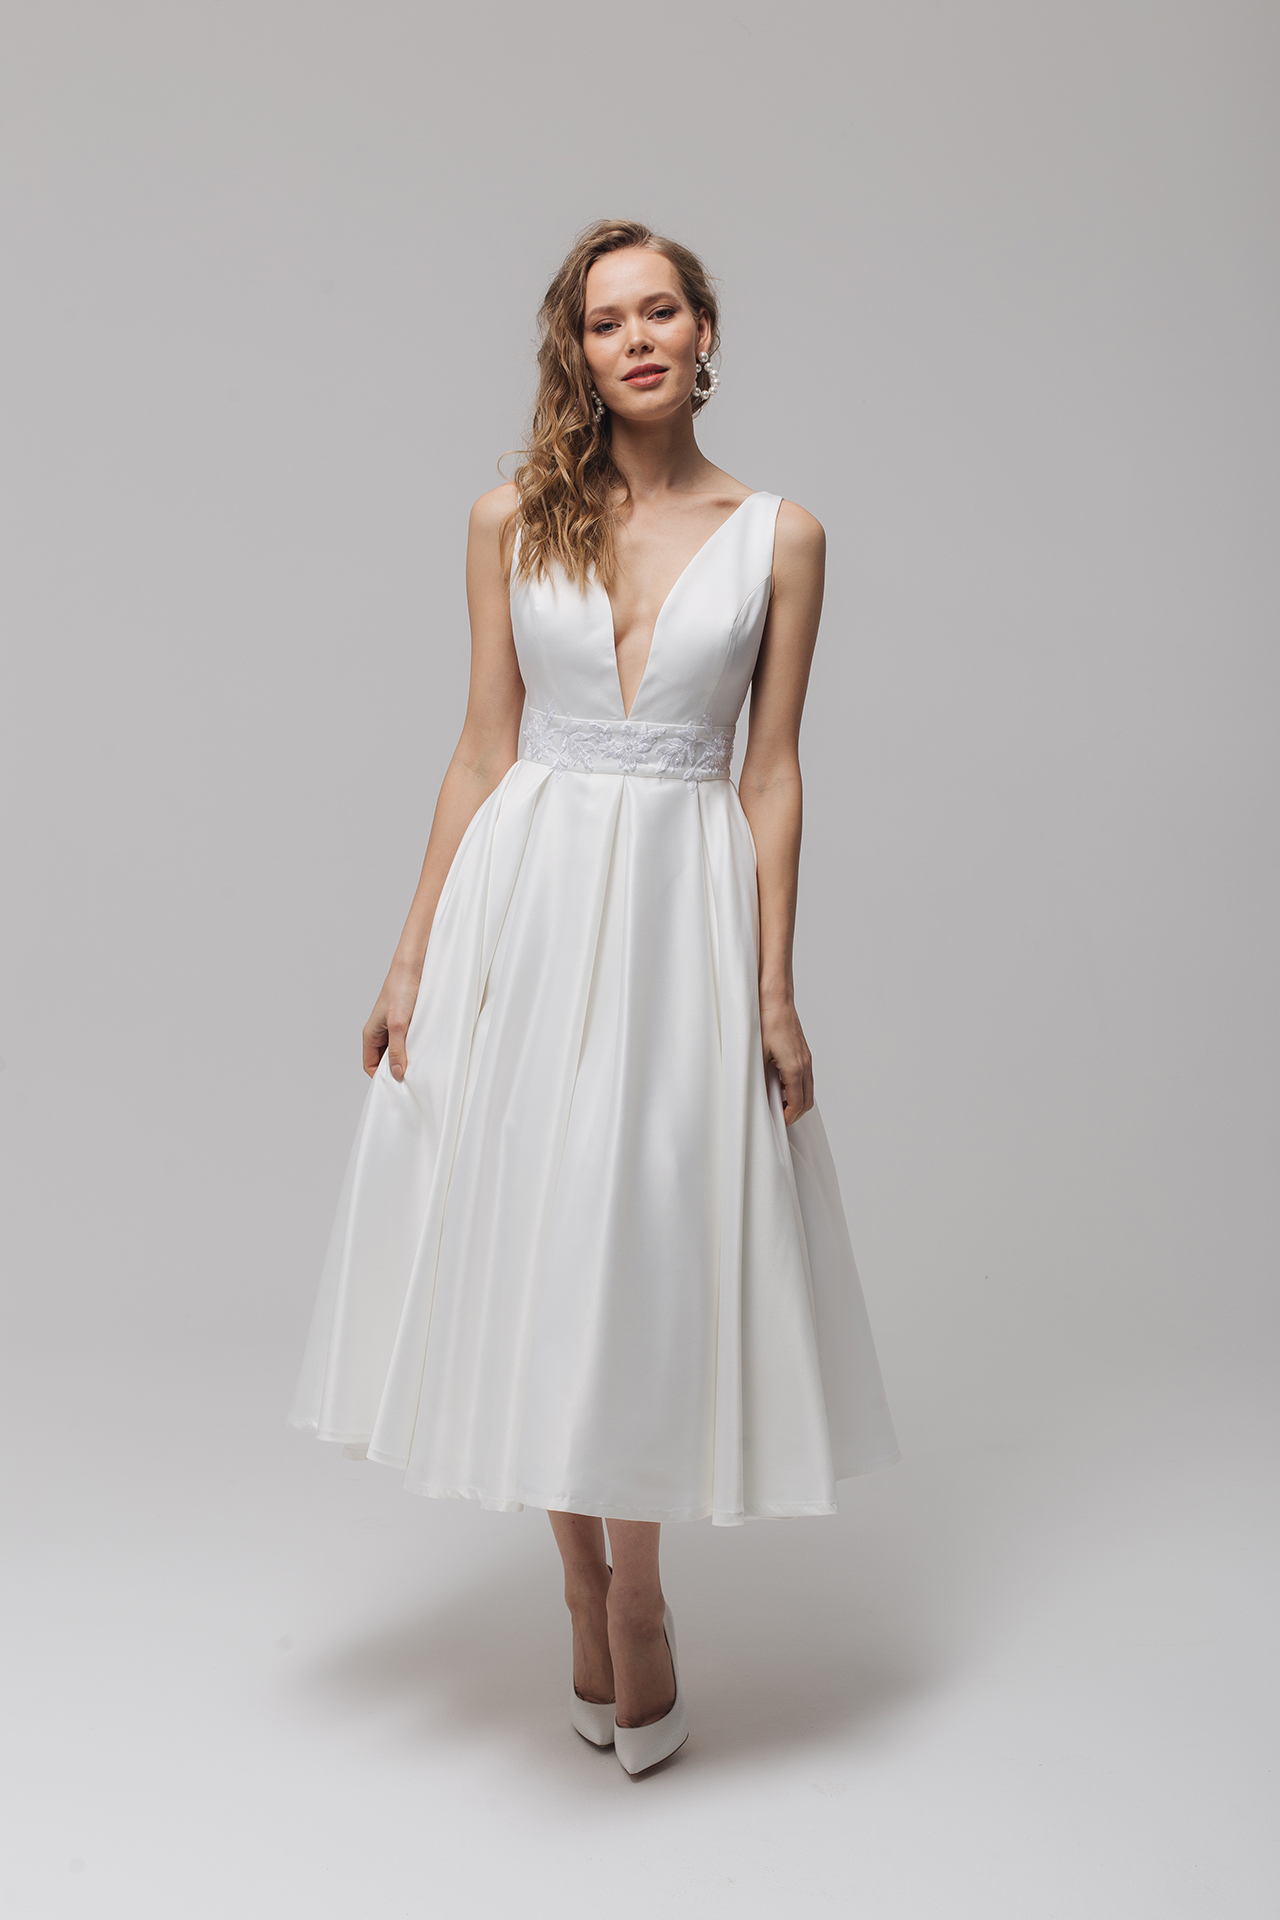 A line tea length wedding dress, Vintage style tea length wedding dress, Tea length white ball gown wedding dress, Daniela